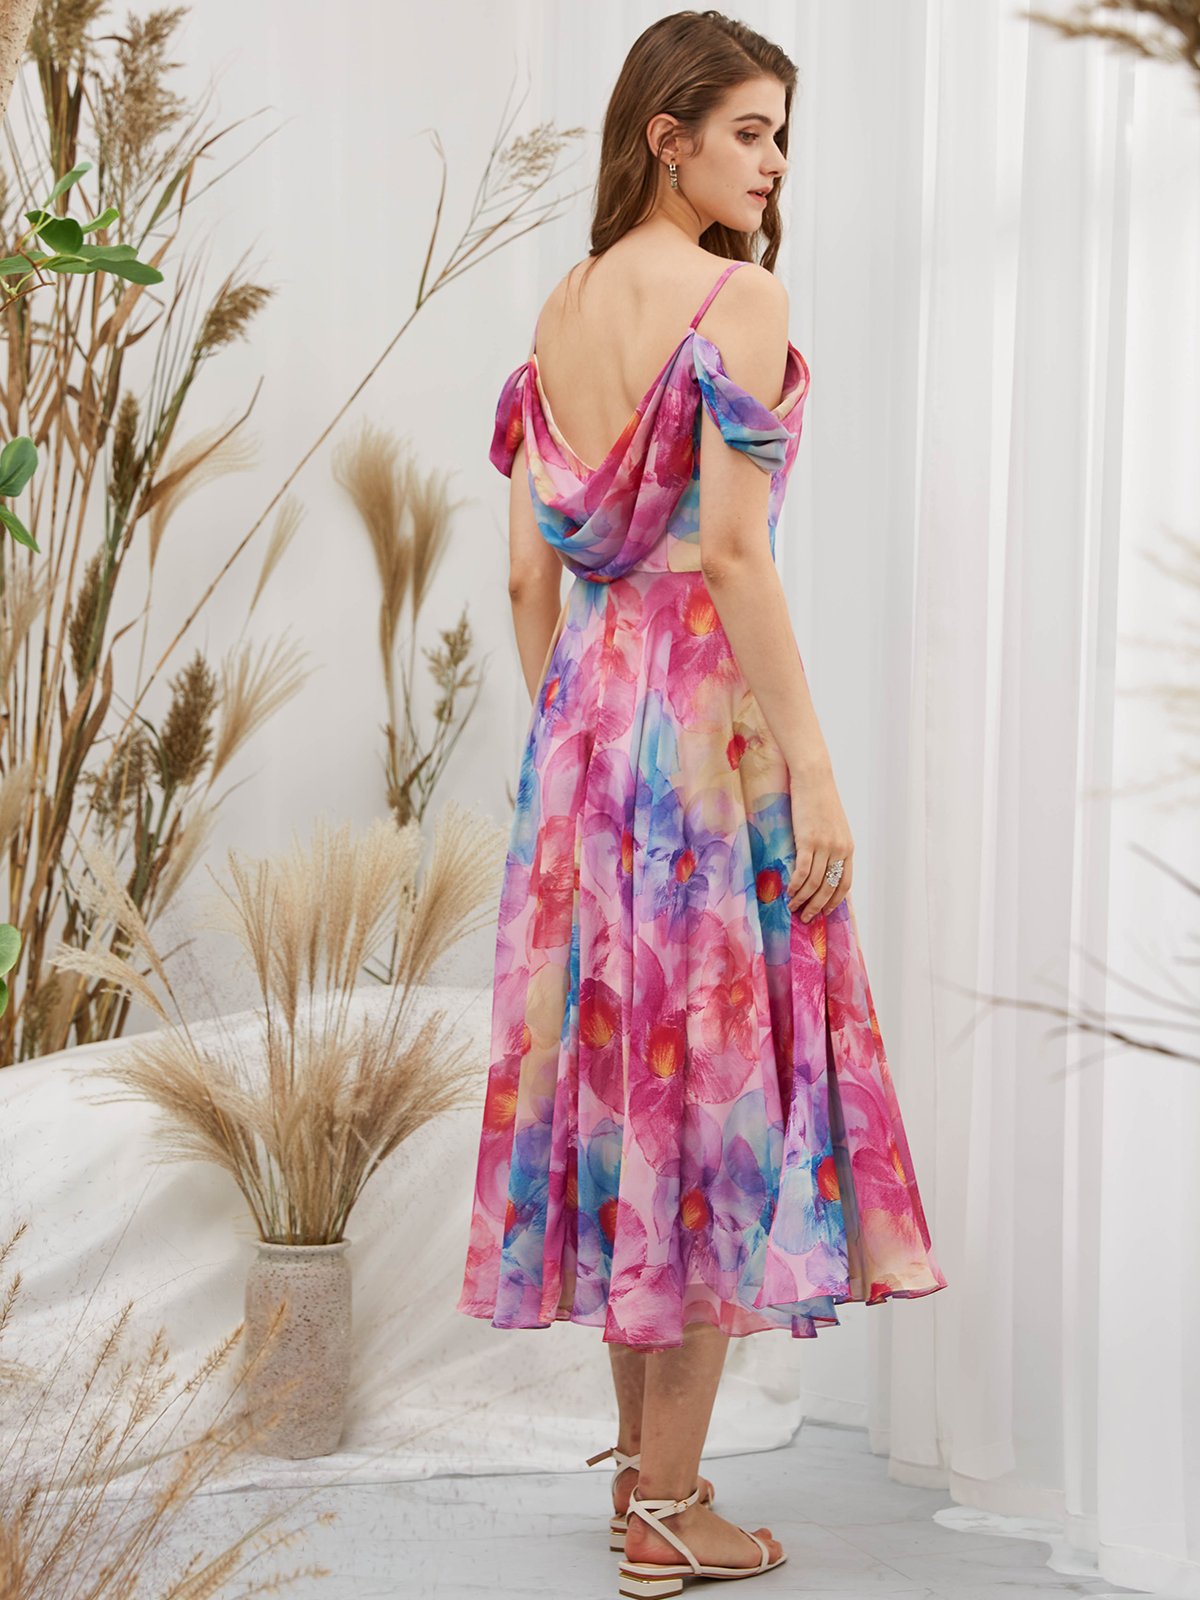 MissJophiel Straps V neck Off the Shoulder Chiffon Print Floral Fuchsia Tea Length Formal Gown